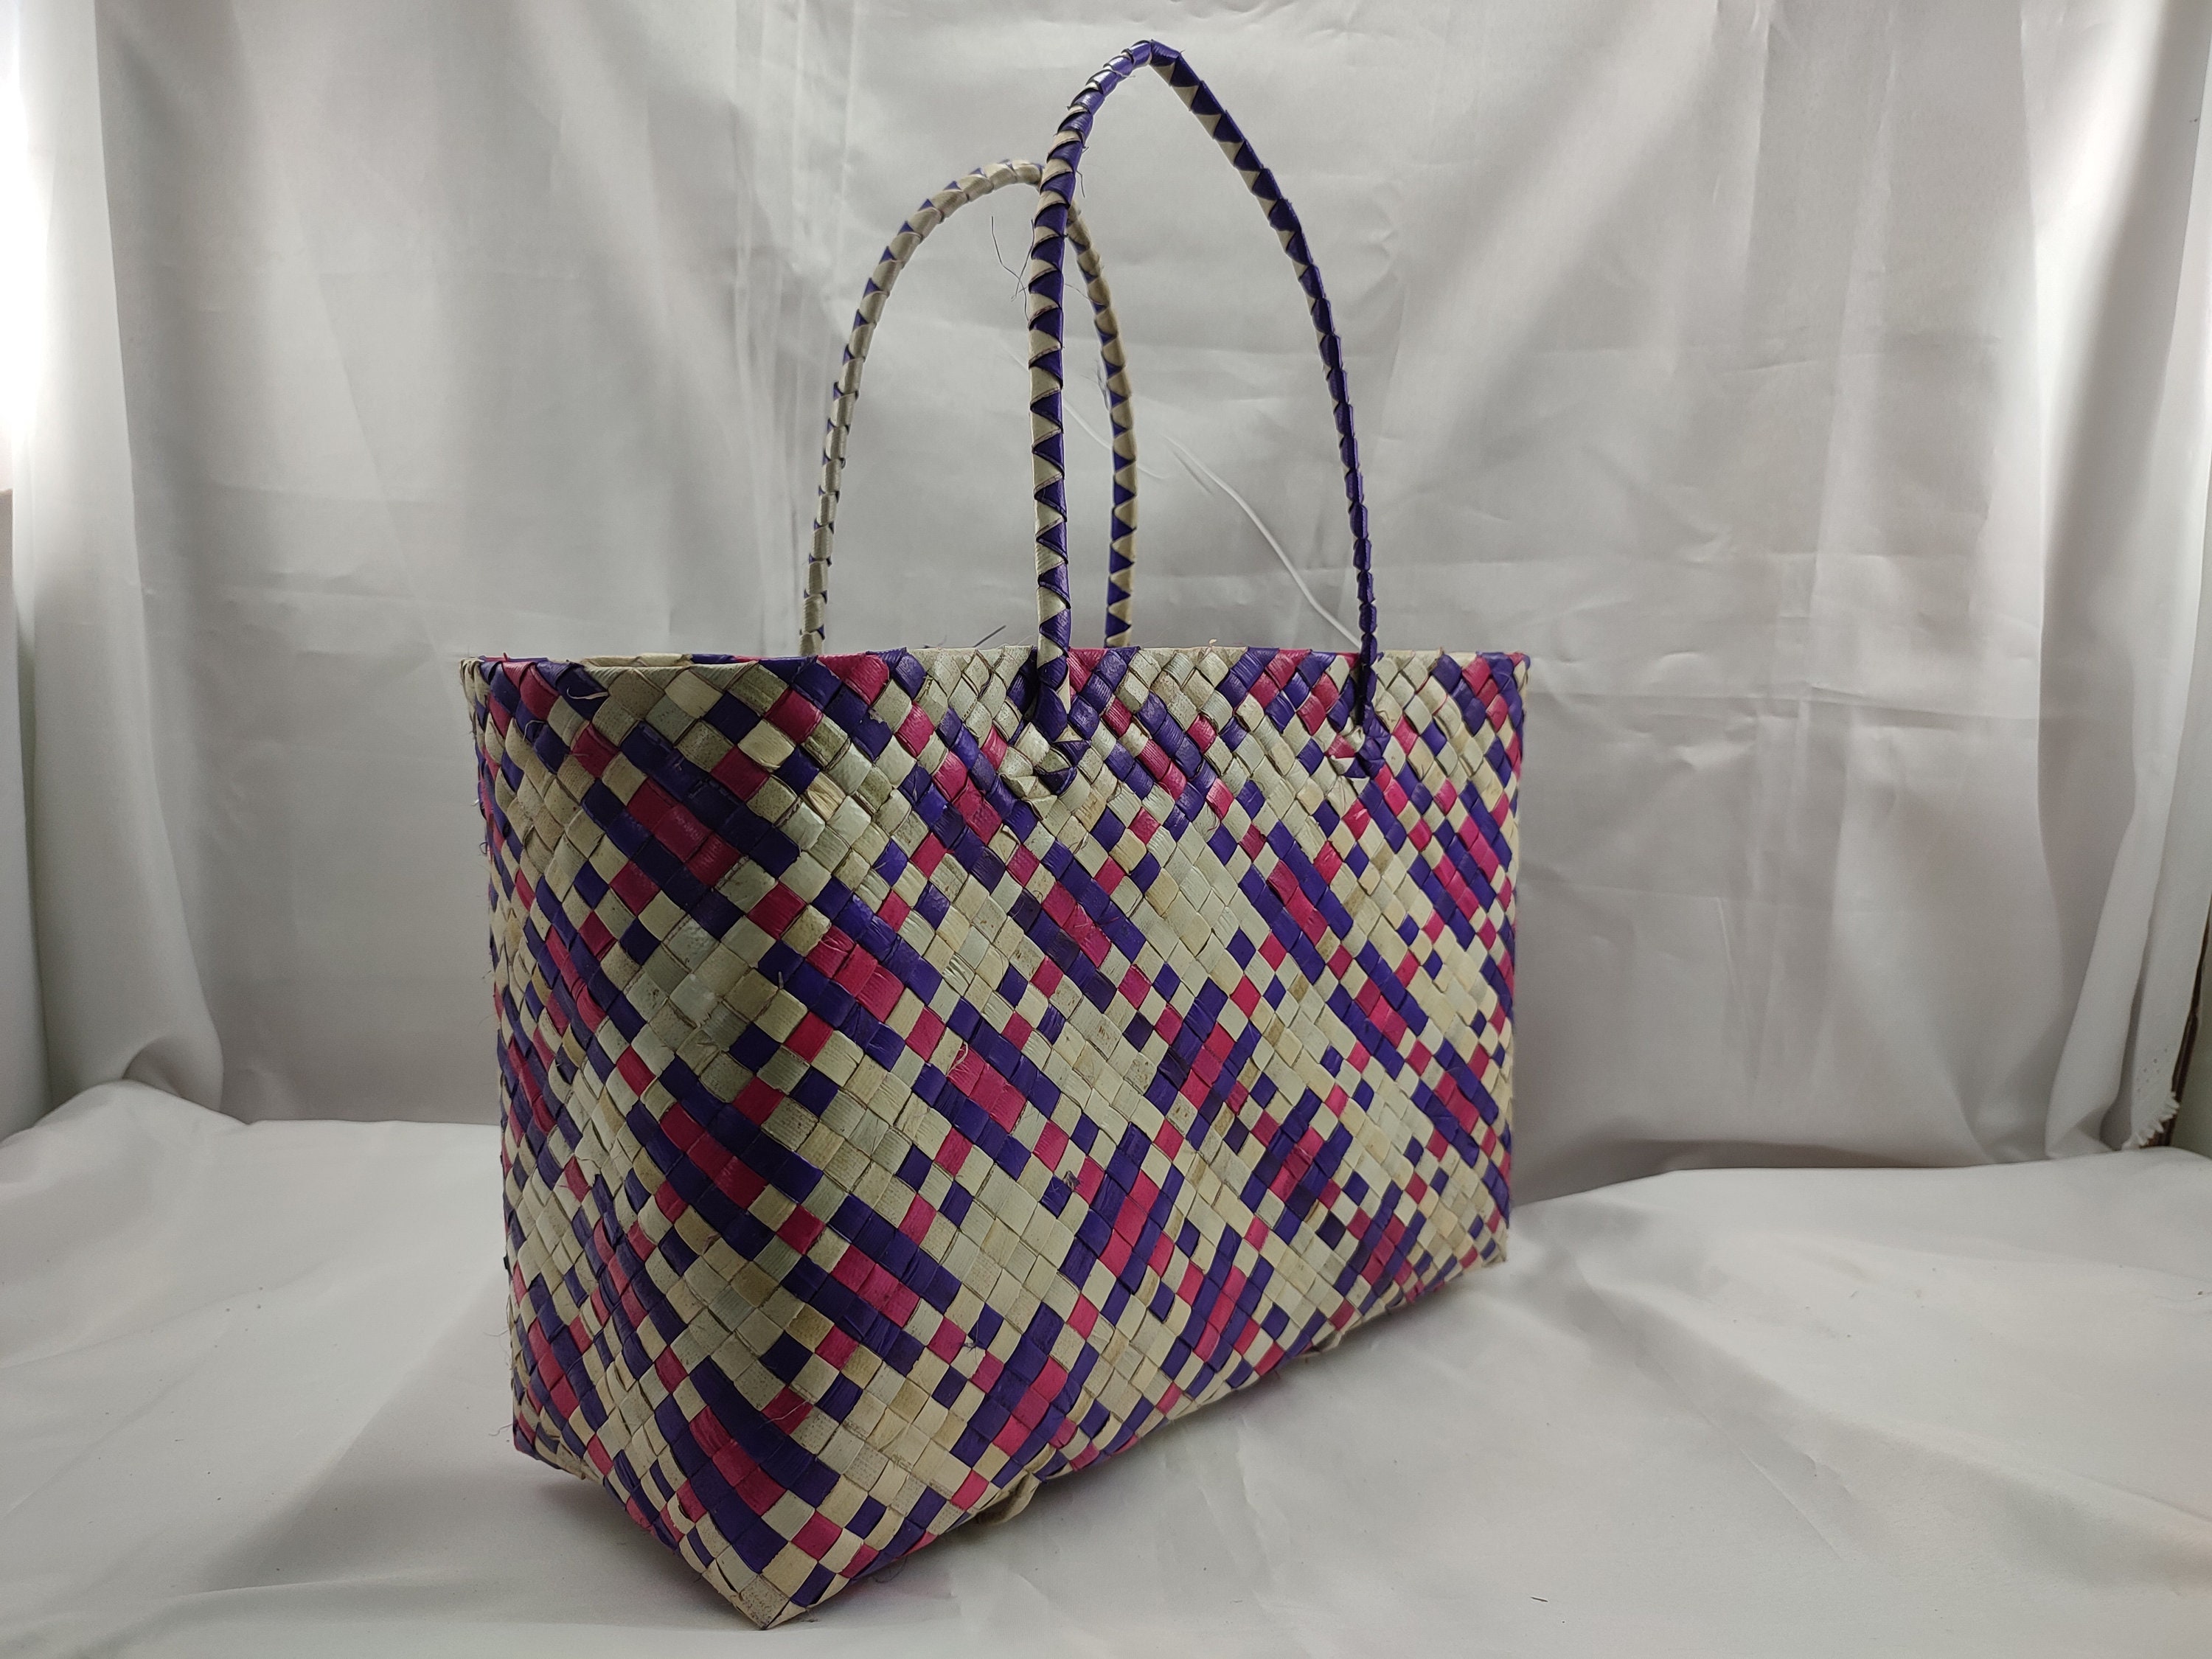 Pretty Bayong Bag Made in Philippines Handwoven Buri Bag - Etsy UK